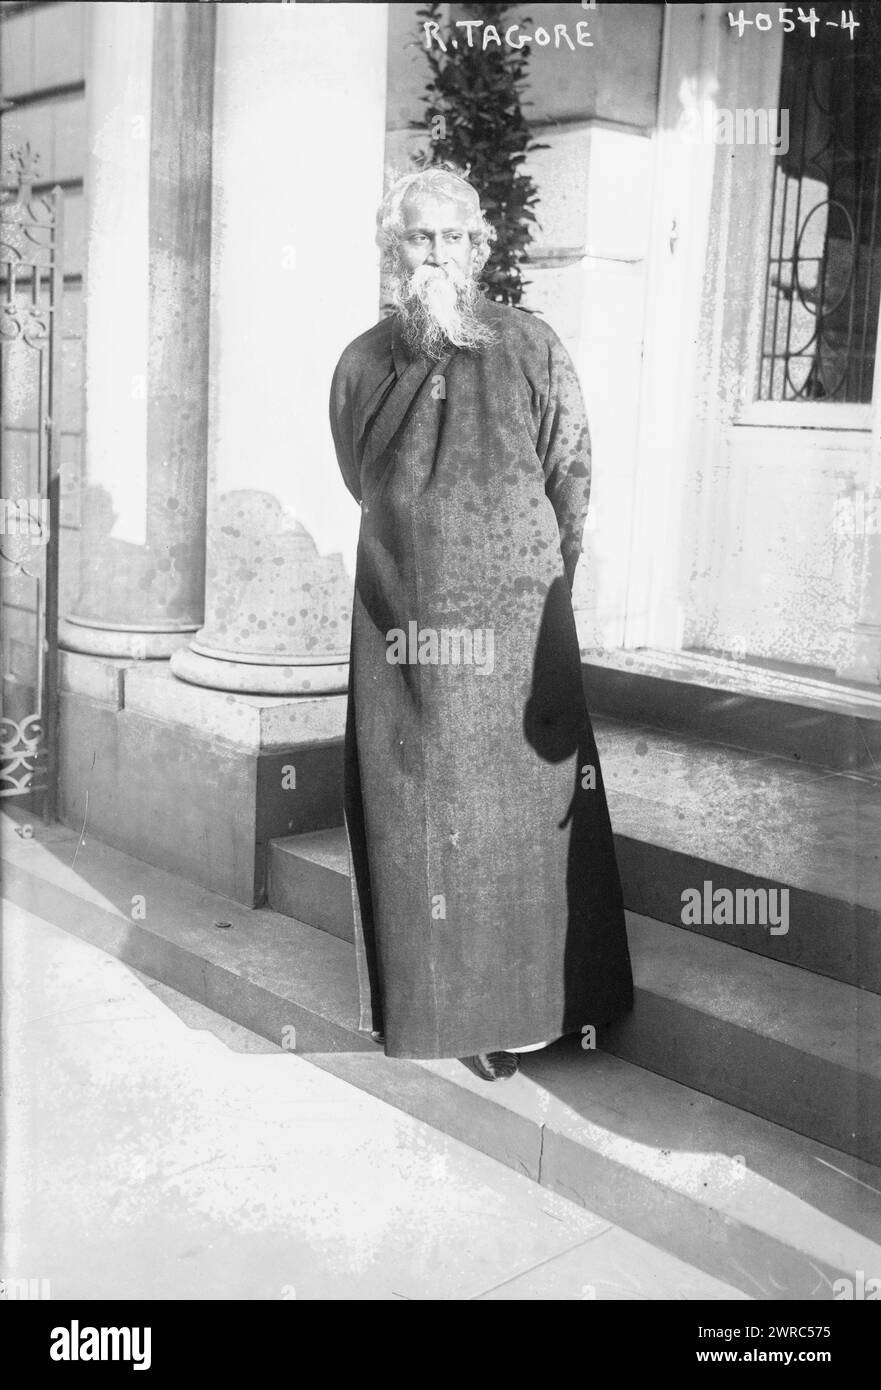 R. Tagore, Photo shows Rabindranath Tagore (1861-1941)., 1916. Nov. 21, Glass negatives, 1 negative: glass Stock Photo